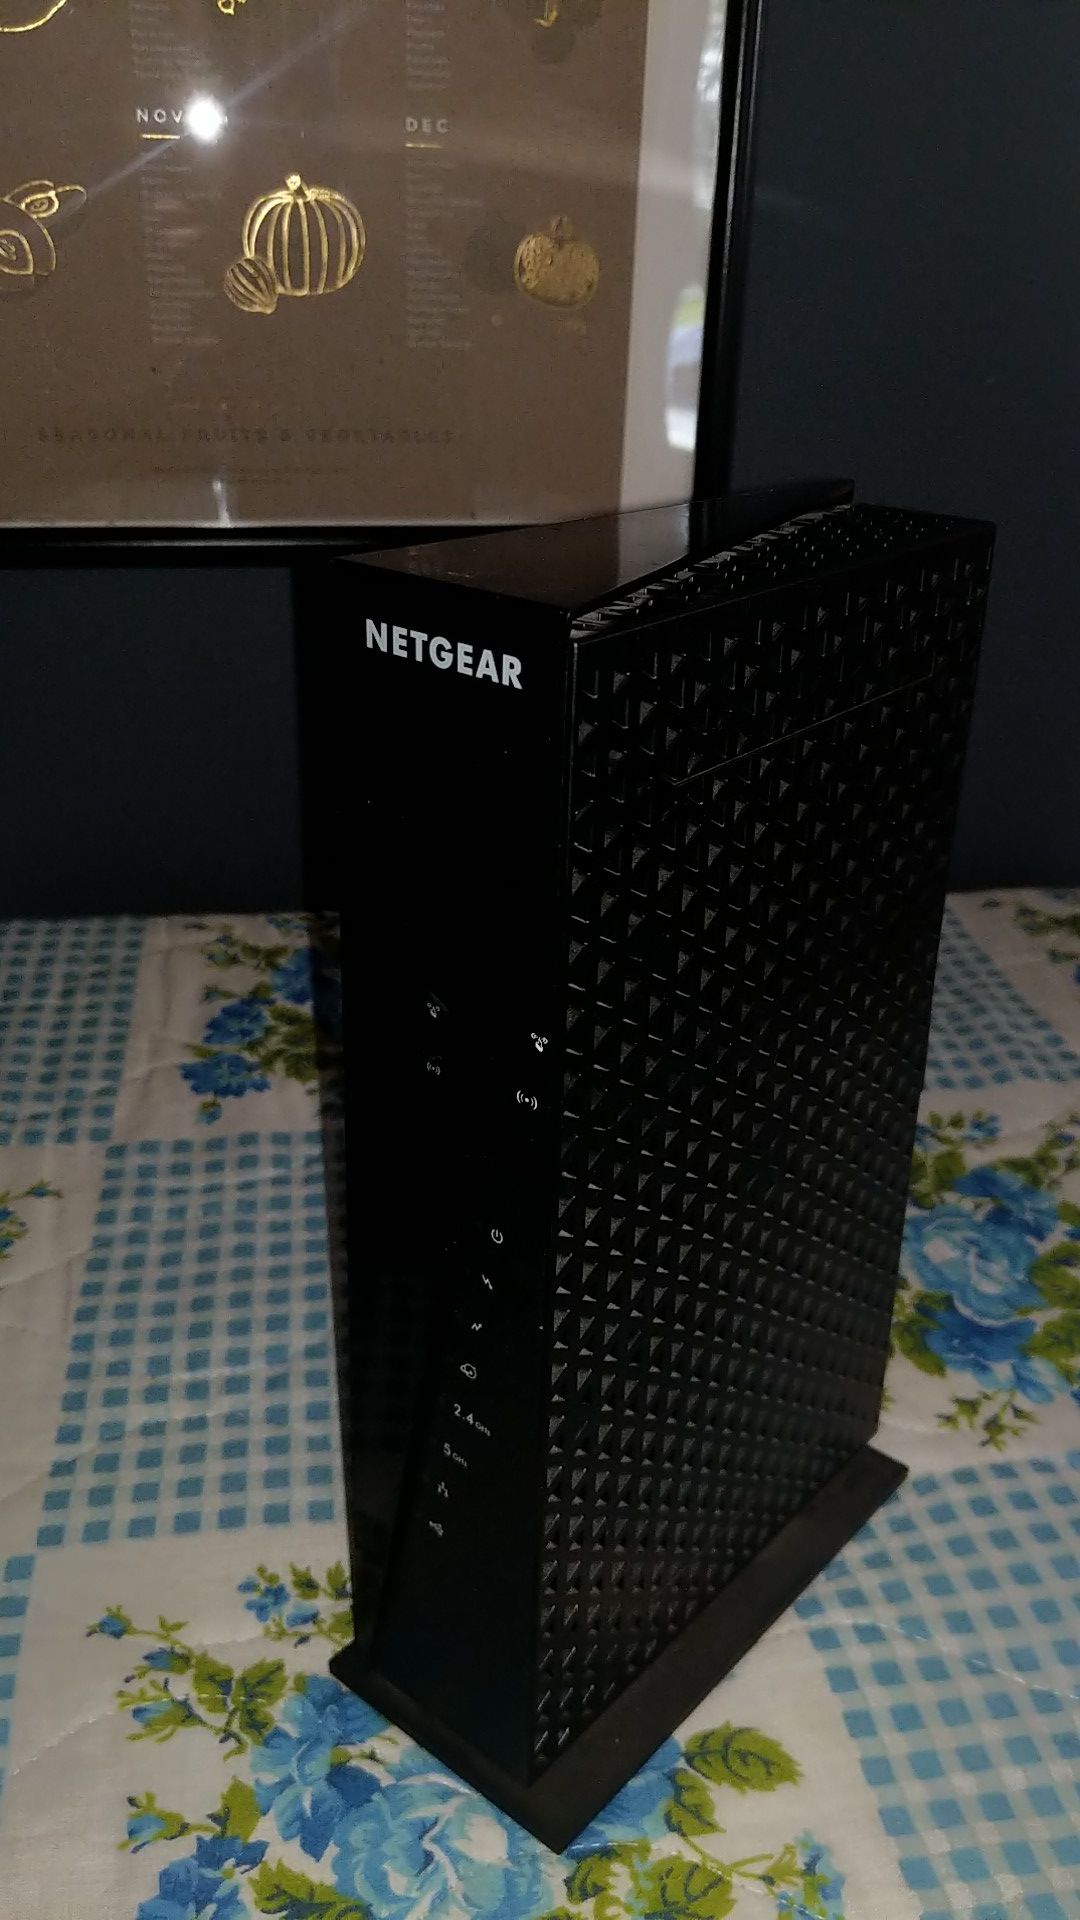 Netgear AC1750 WiFi cable modem router model:C6300